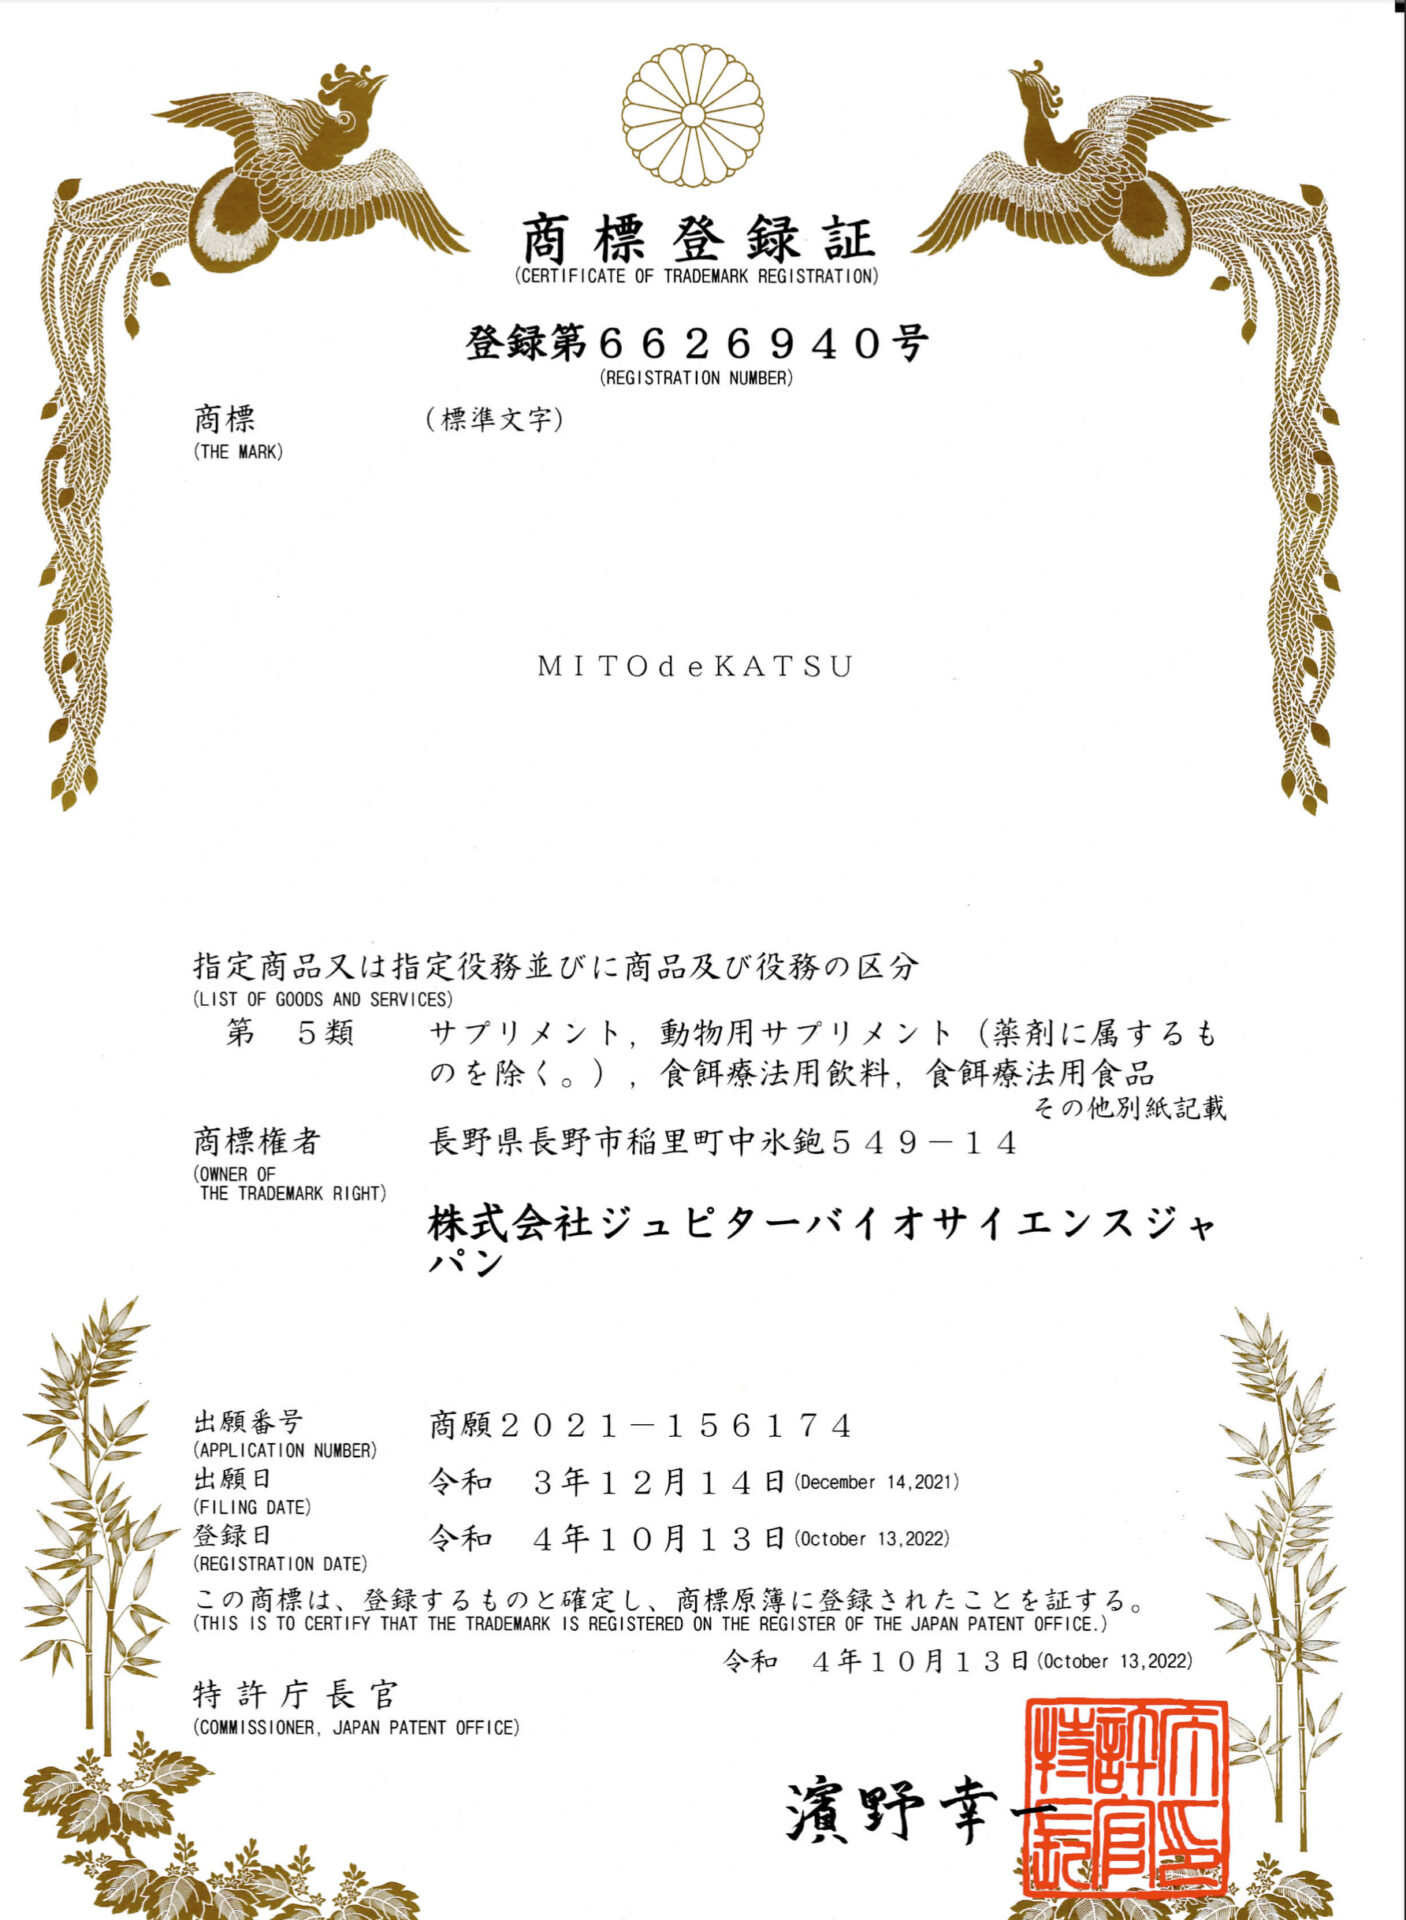 MITOdeKATSUが特許庁より商標として登録されました